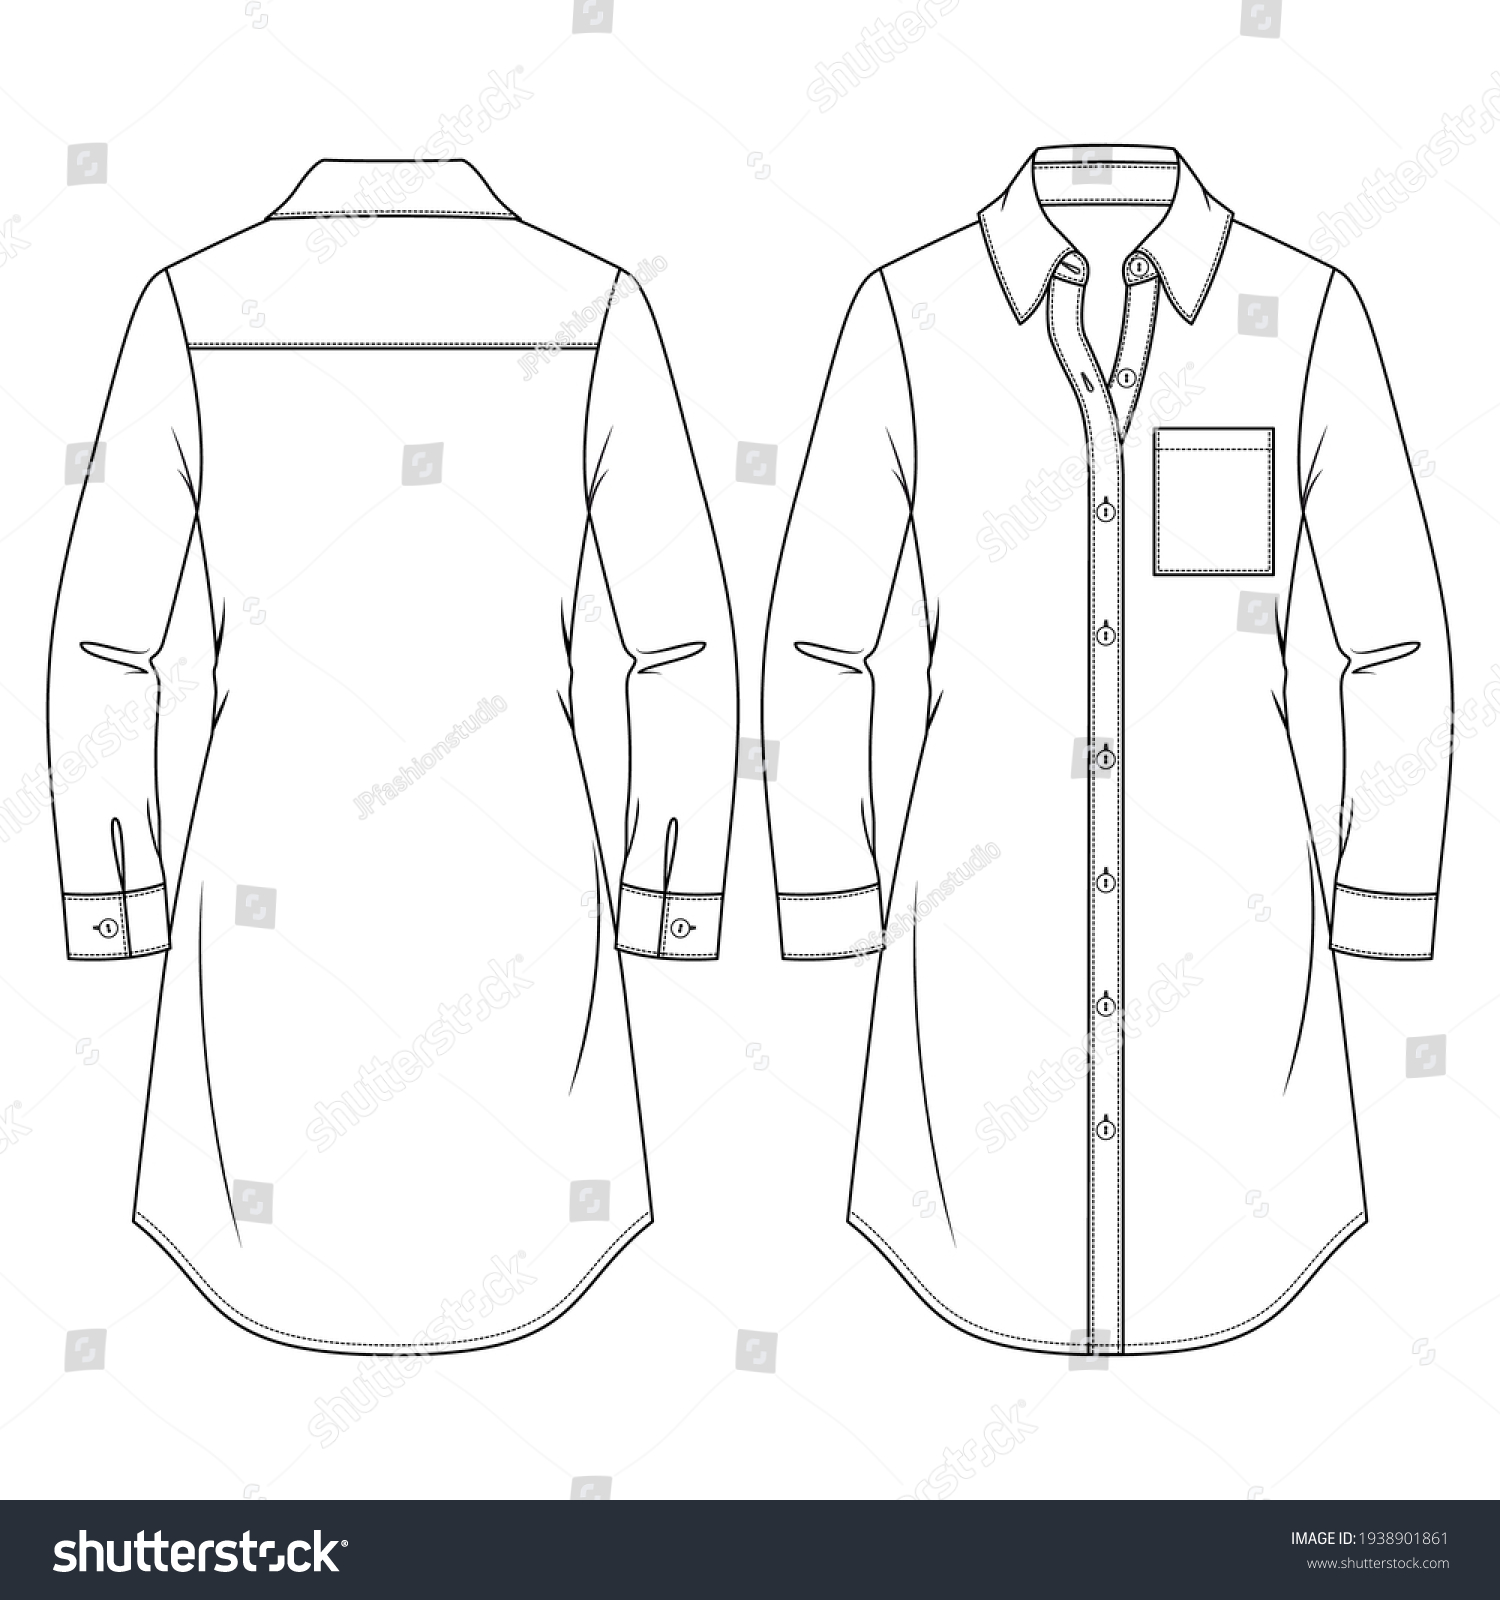 Dress shirt sketch Images, Stock Photos & Vectors | Shutterstock